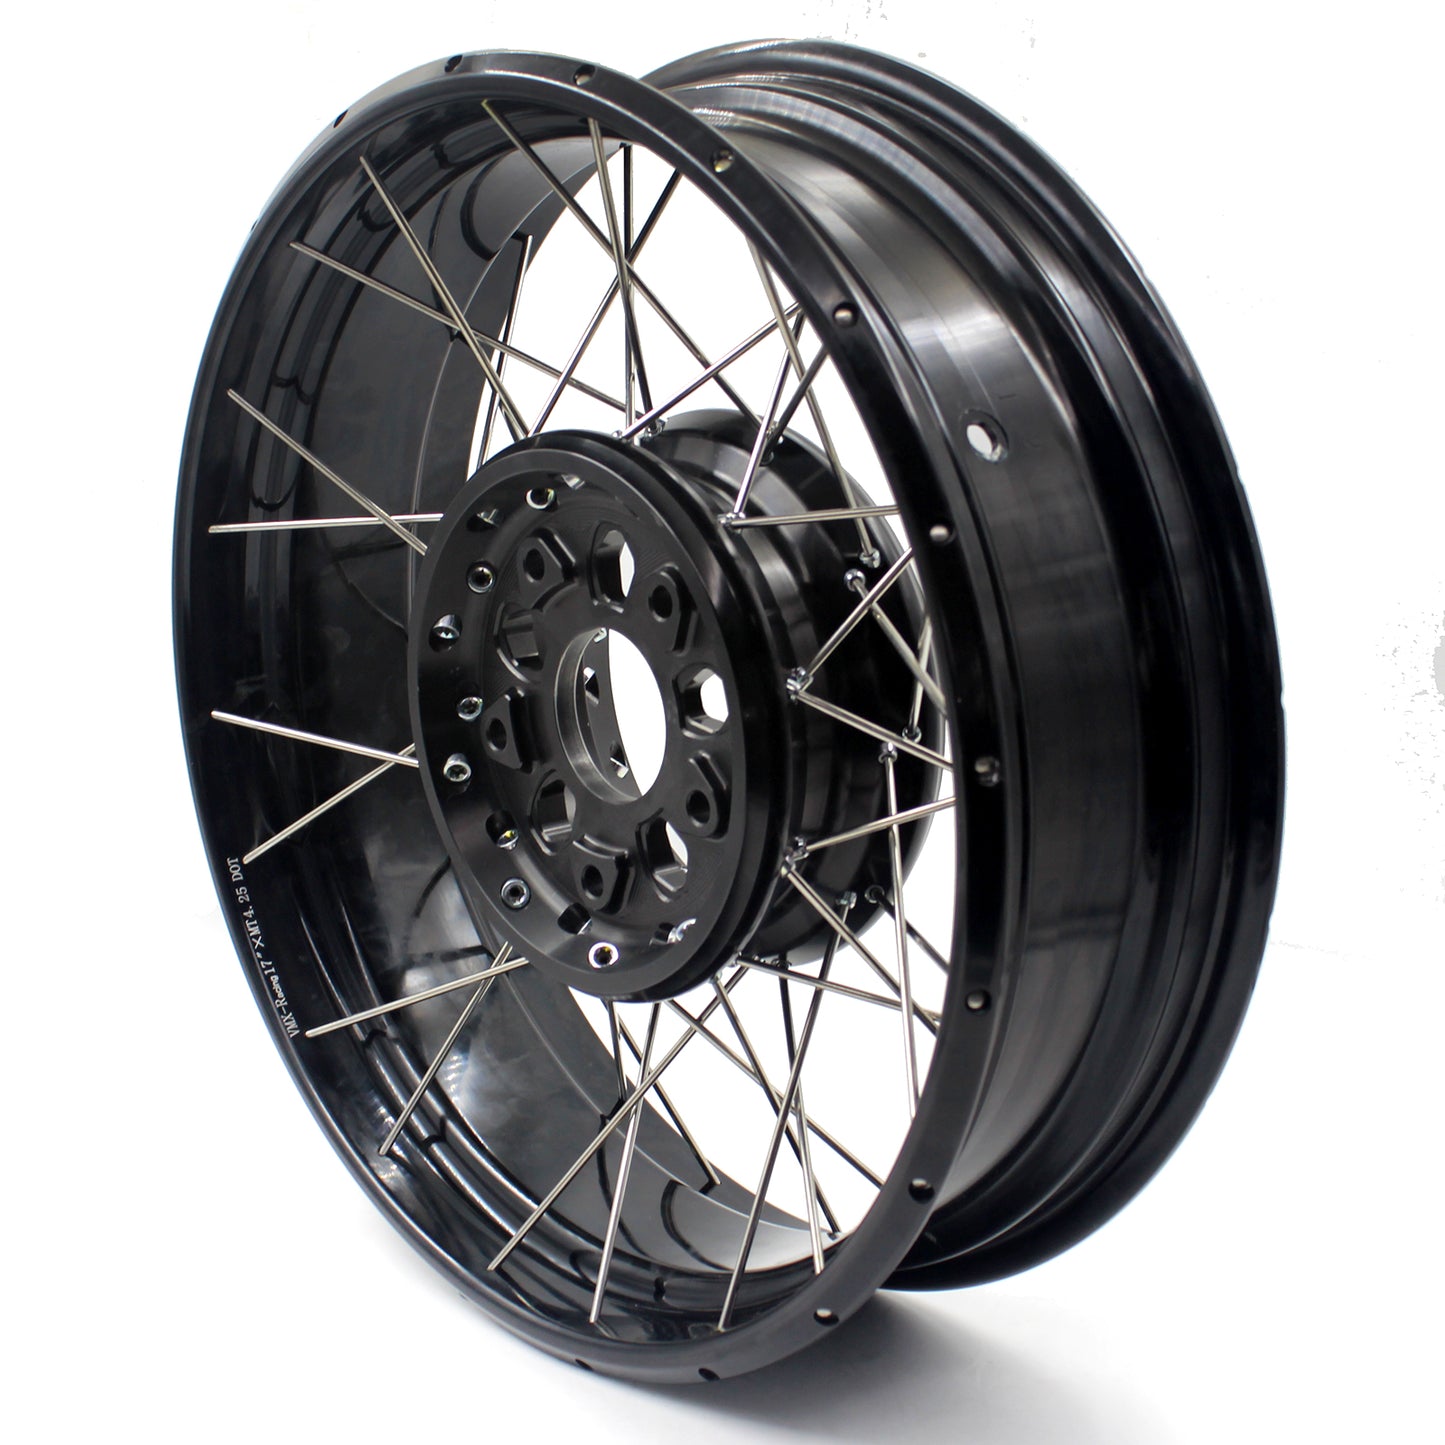 VMX 4.5*17 Inch Rear Tubeless Spoke Wheels Rims Fit BMW R1200GS/ADV R1250GS/ADV 2019-2023